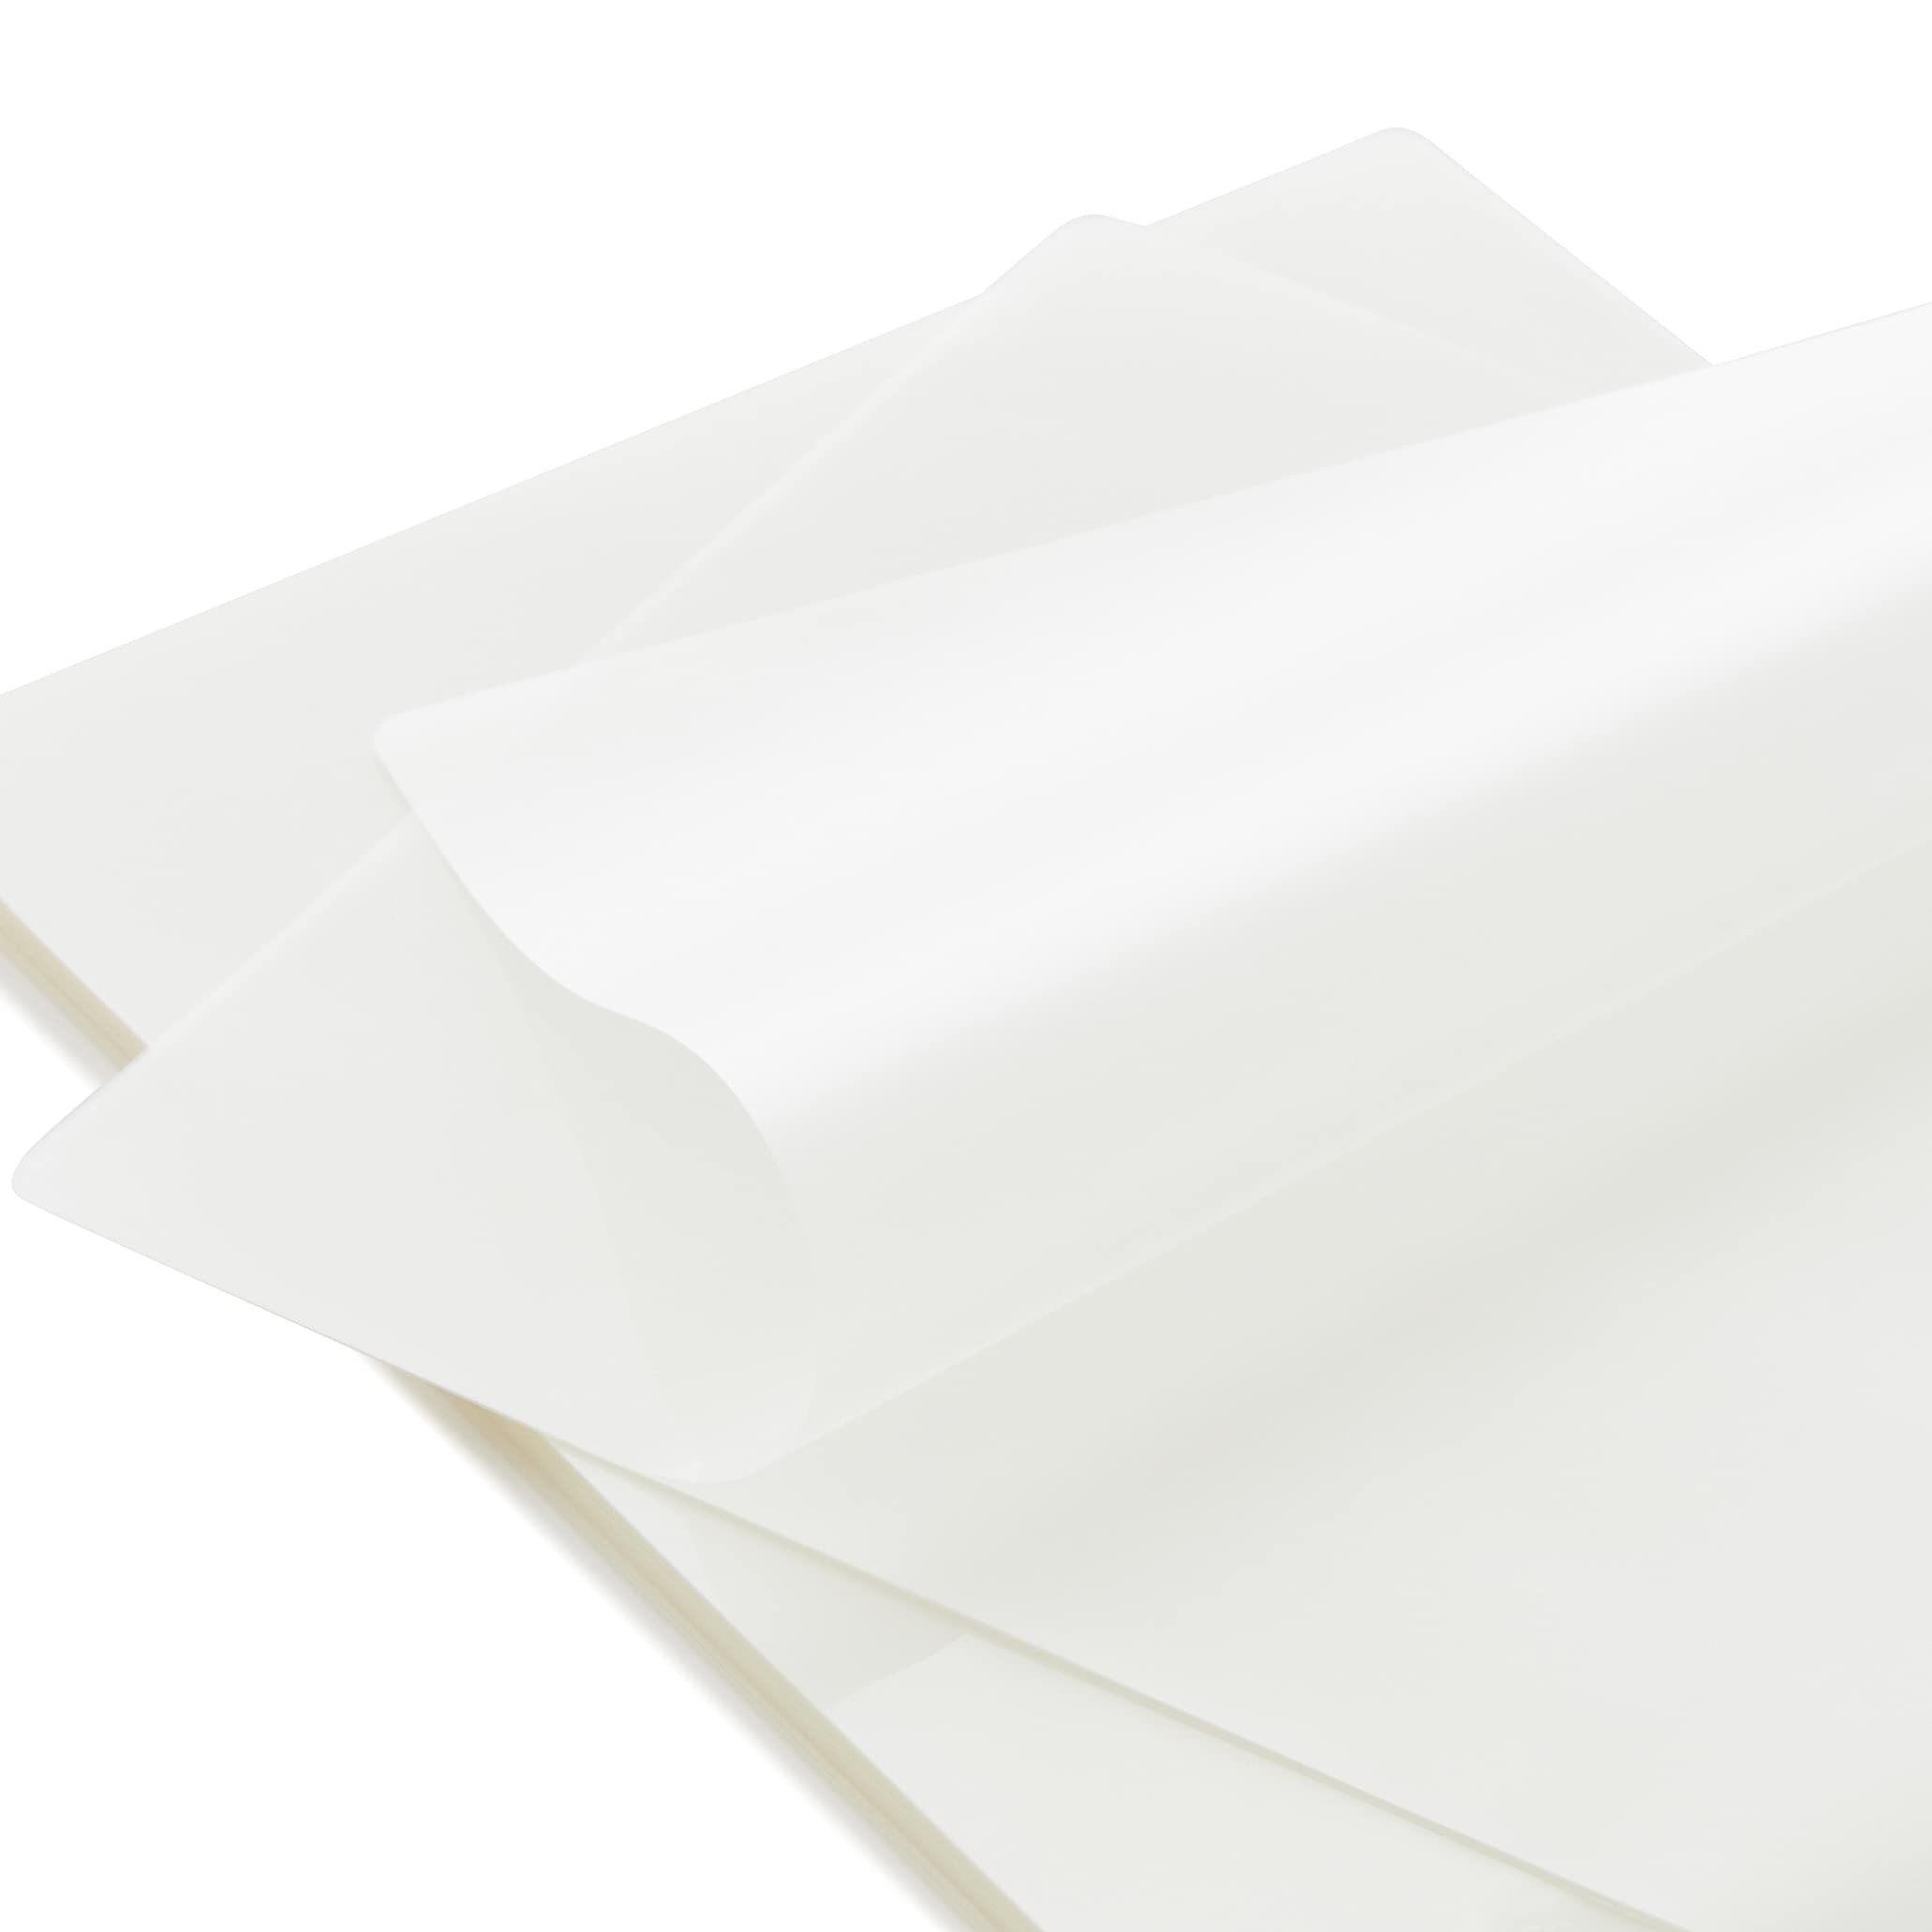 Amazon Basics Clear Thermal Laminating Plastic Paper Laminator Sheets - 11.5 x 9.0-Inch, 100-Pack, 3 mil